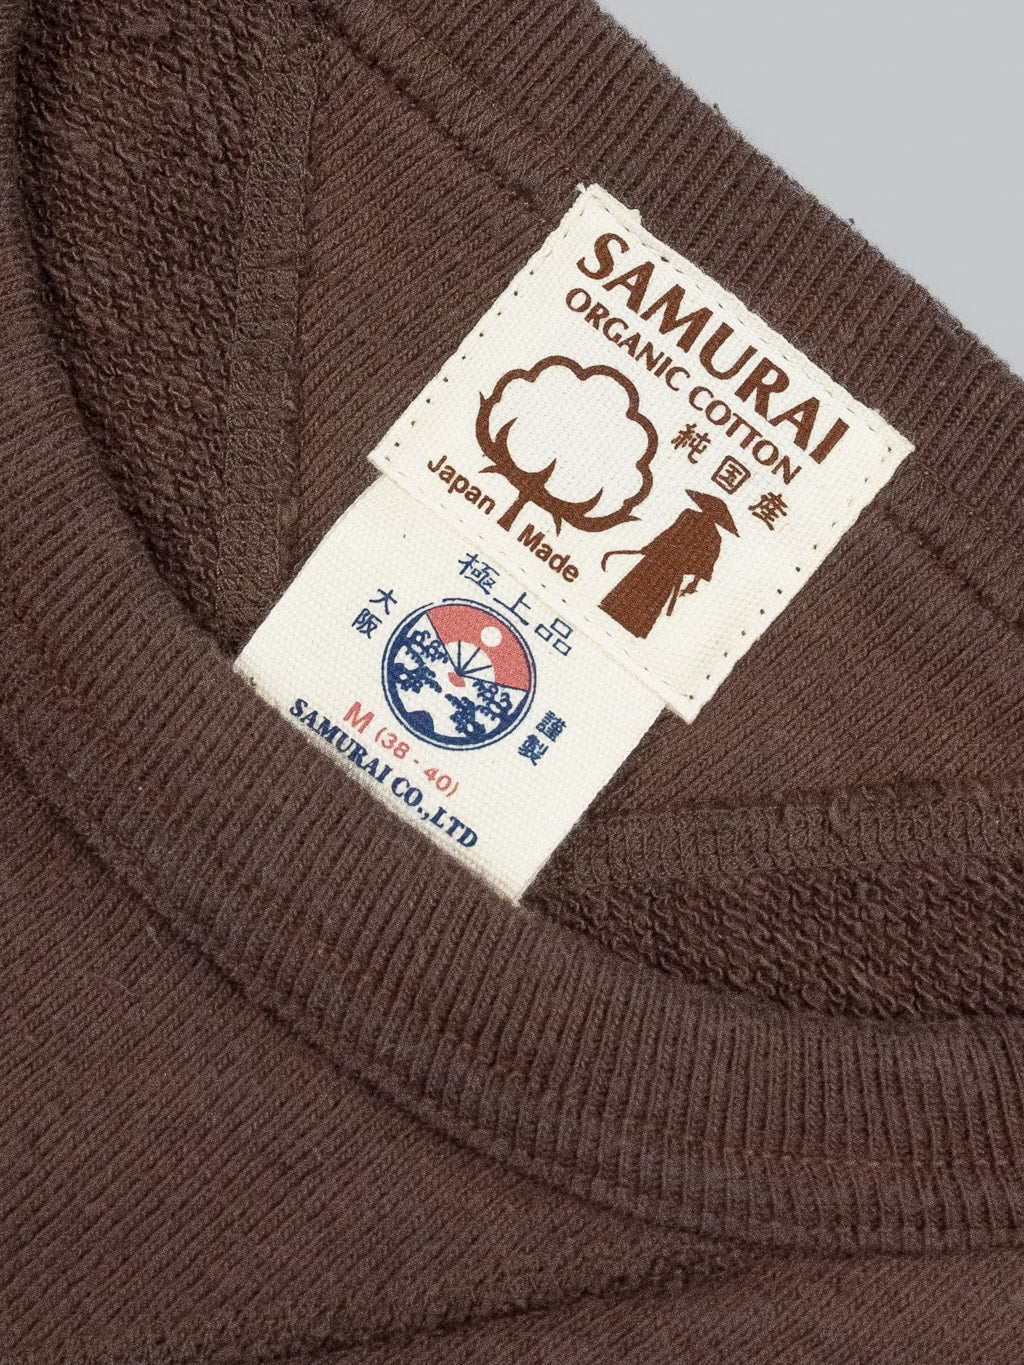 Samurai Jeans Japanese Cotton Sweatshirt Dark Kuri label interior tag